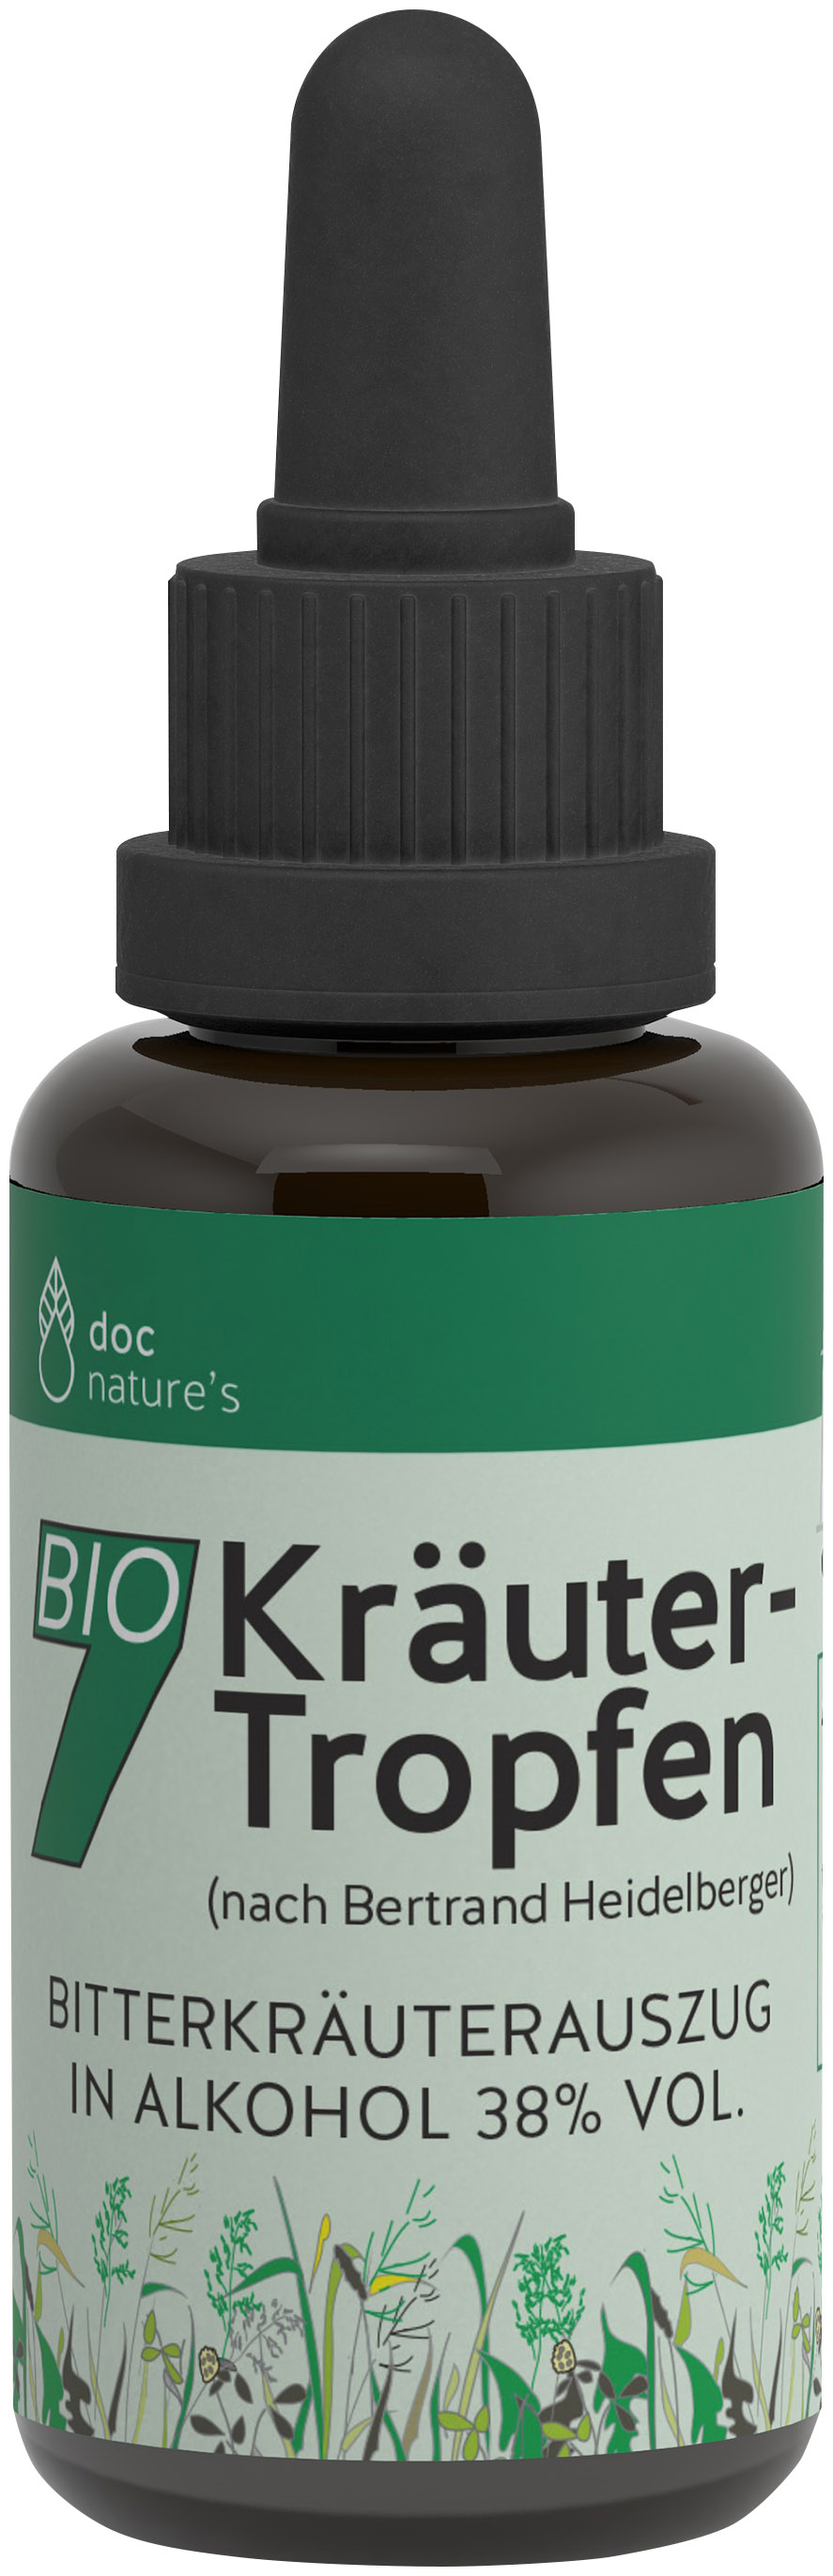 doc nature’s BIO 7 Kräuter-Tropfen